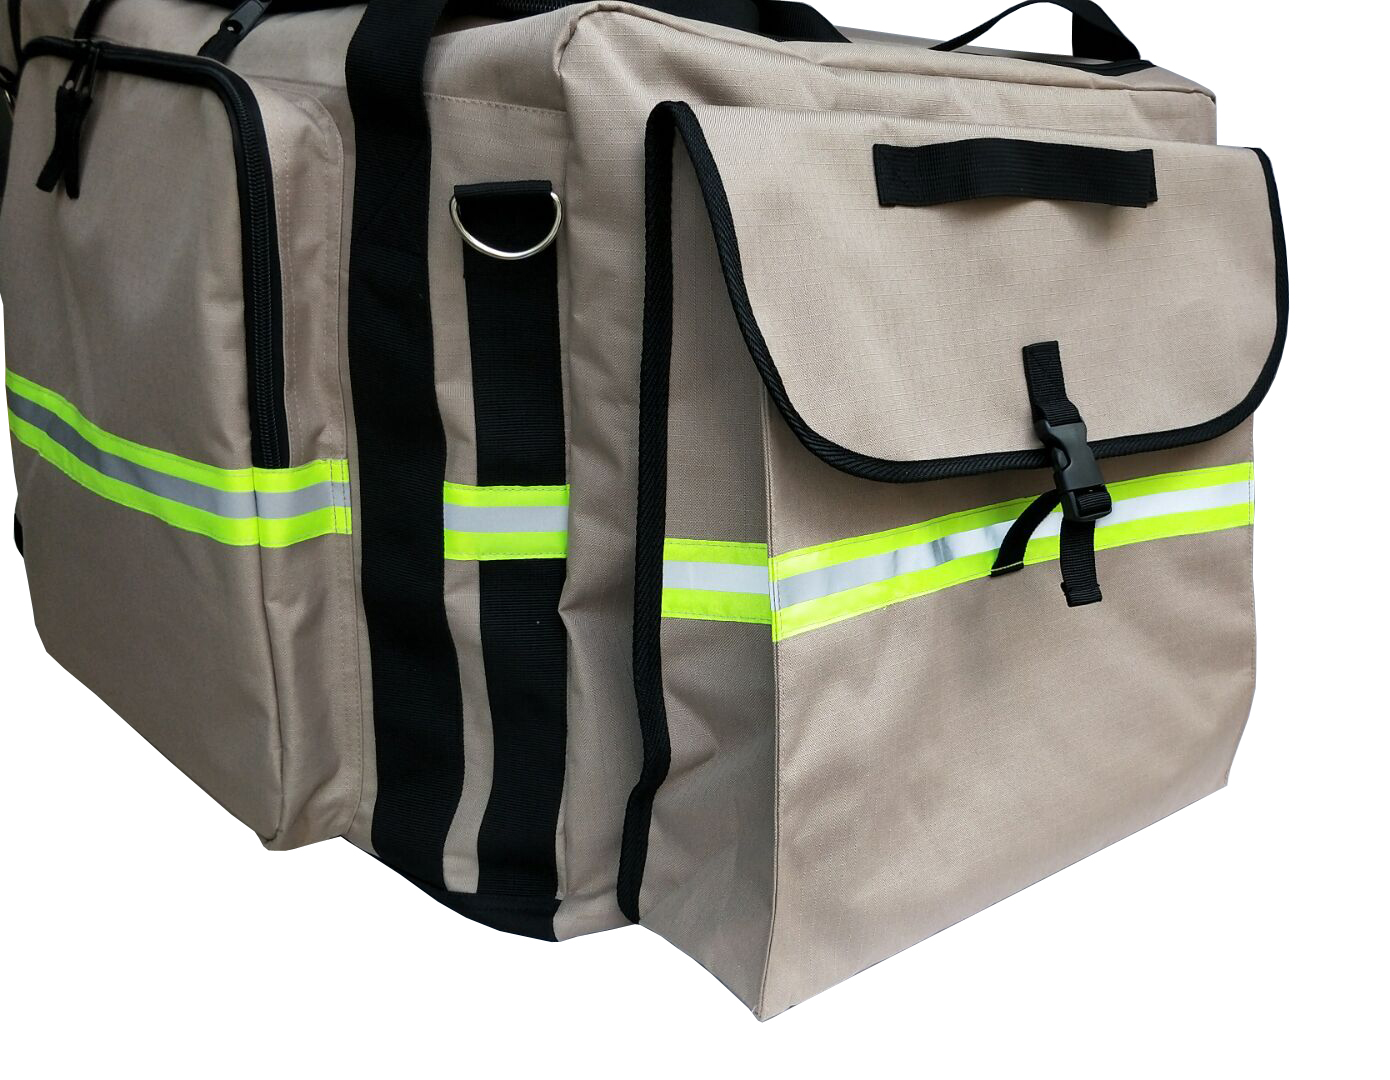 Large Customized Firefighter Gear Bag